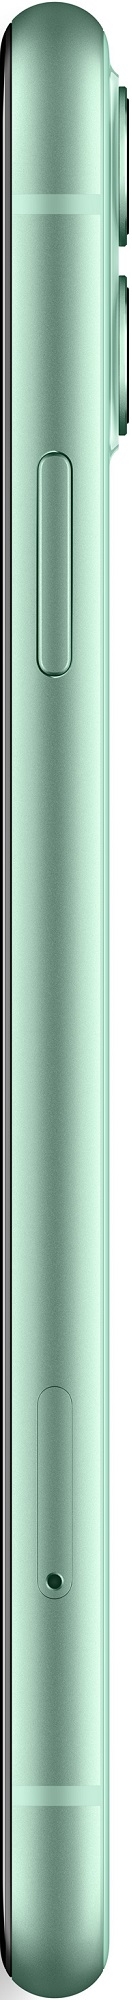 Apple iPhone 11 64GB (2020)